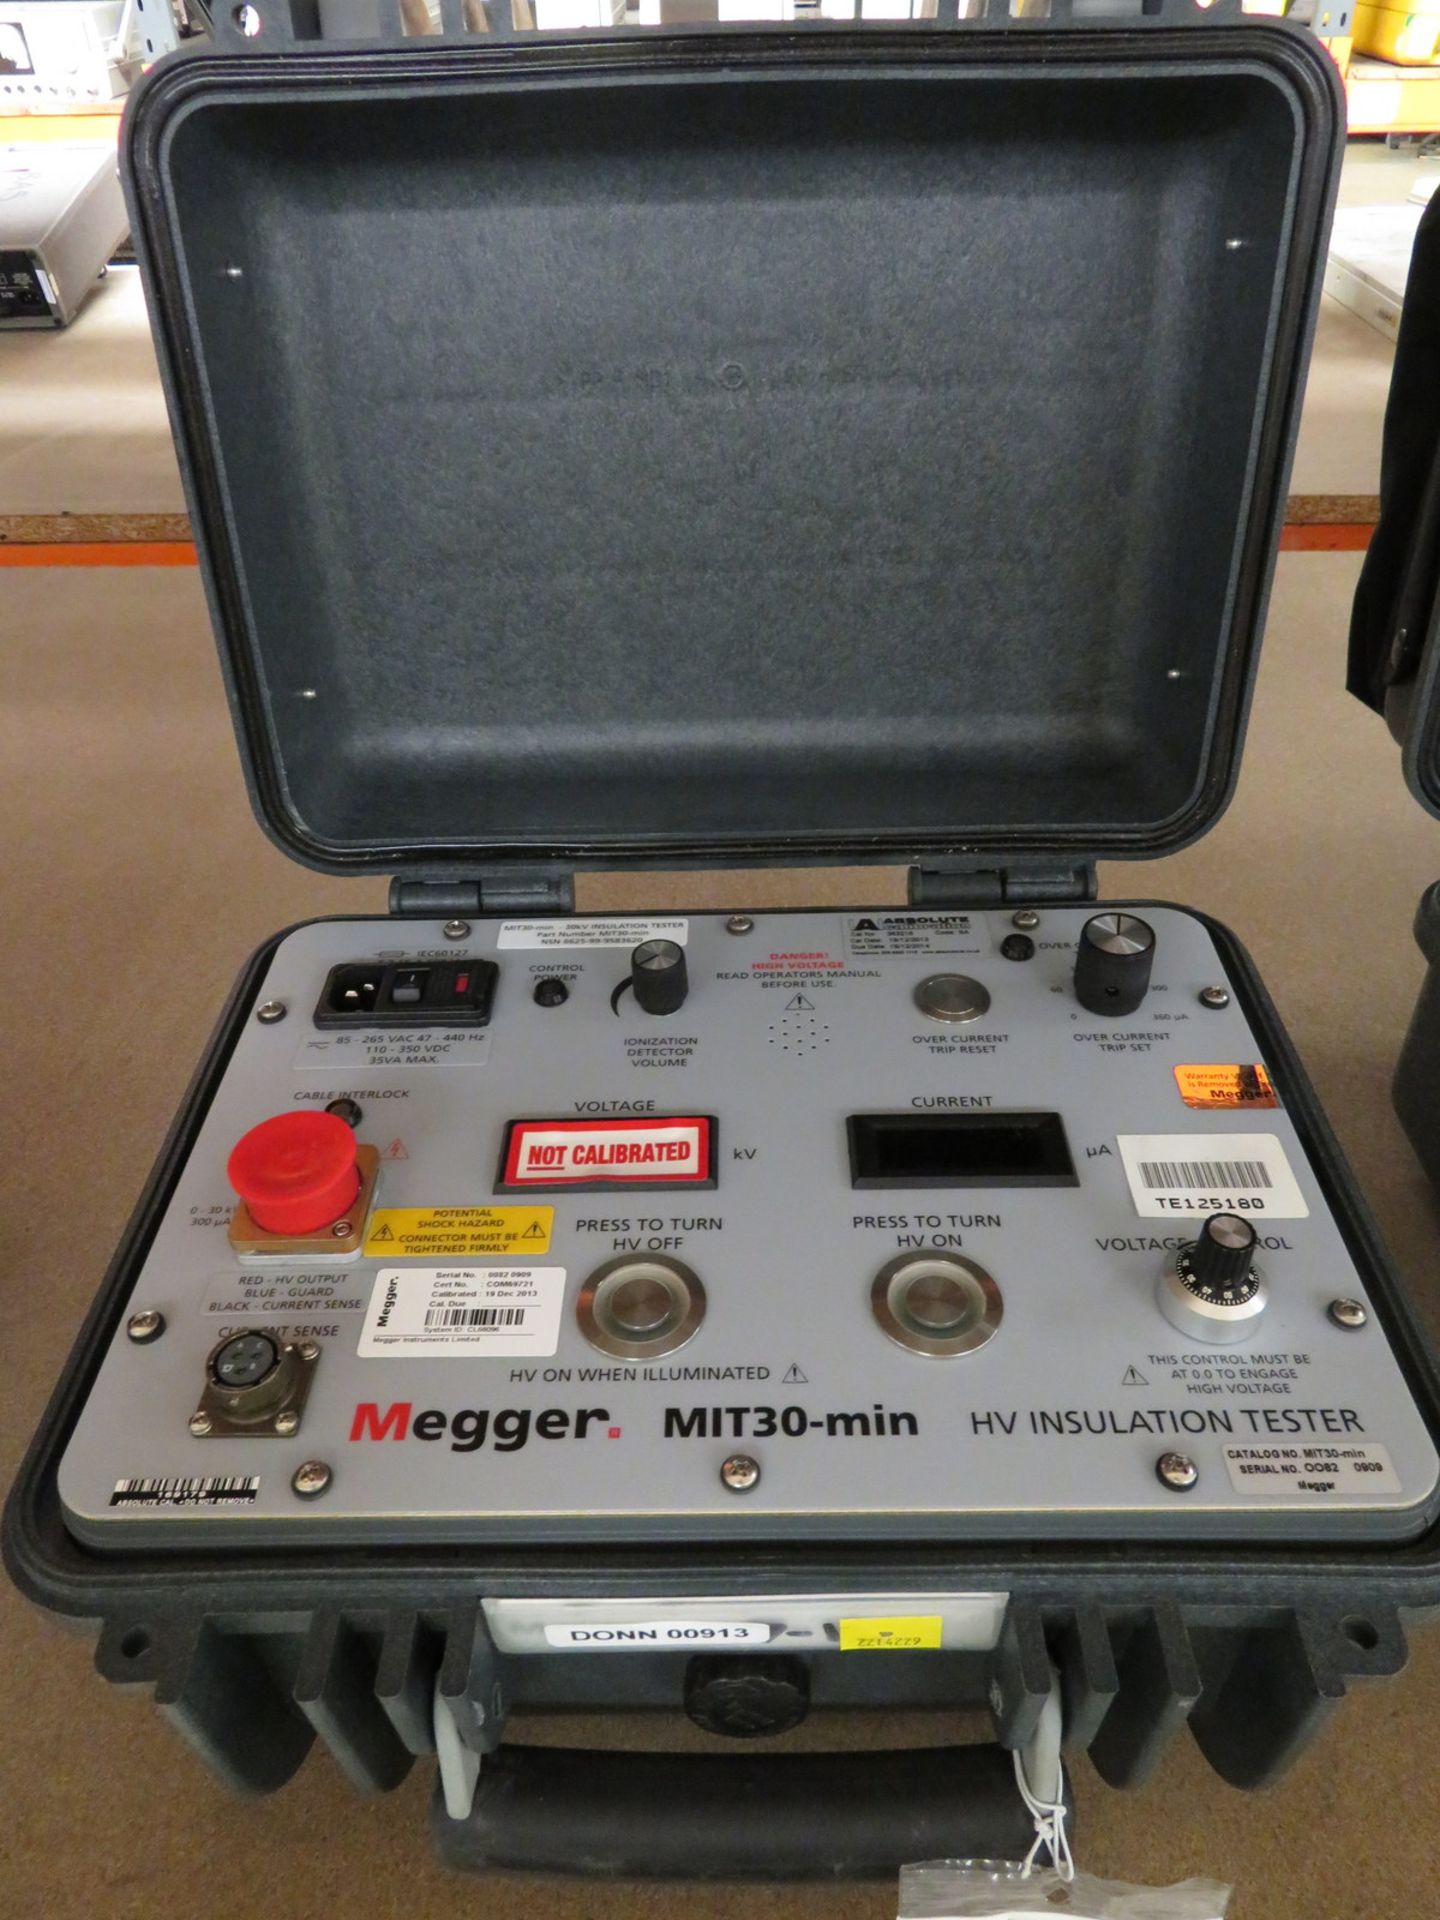 Megger MIT30-min HV insulation tester in flight case